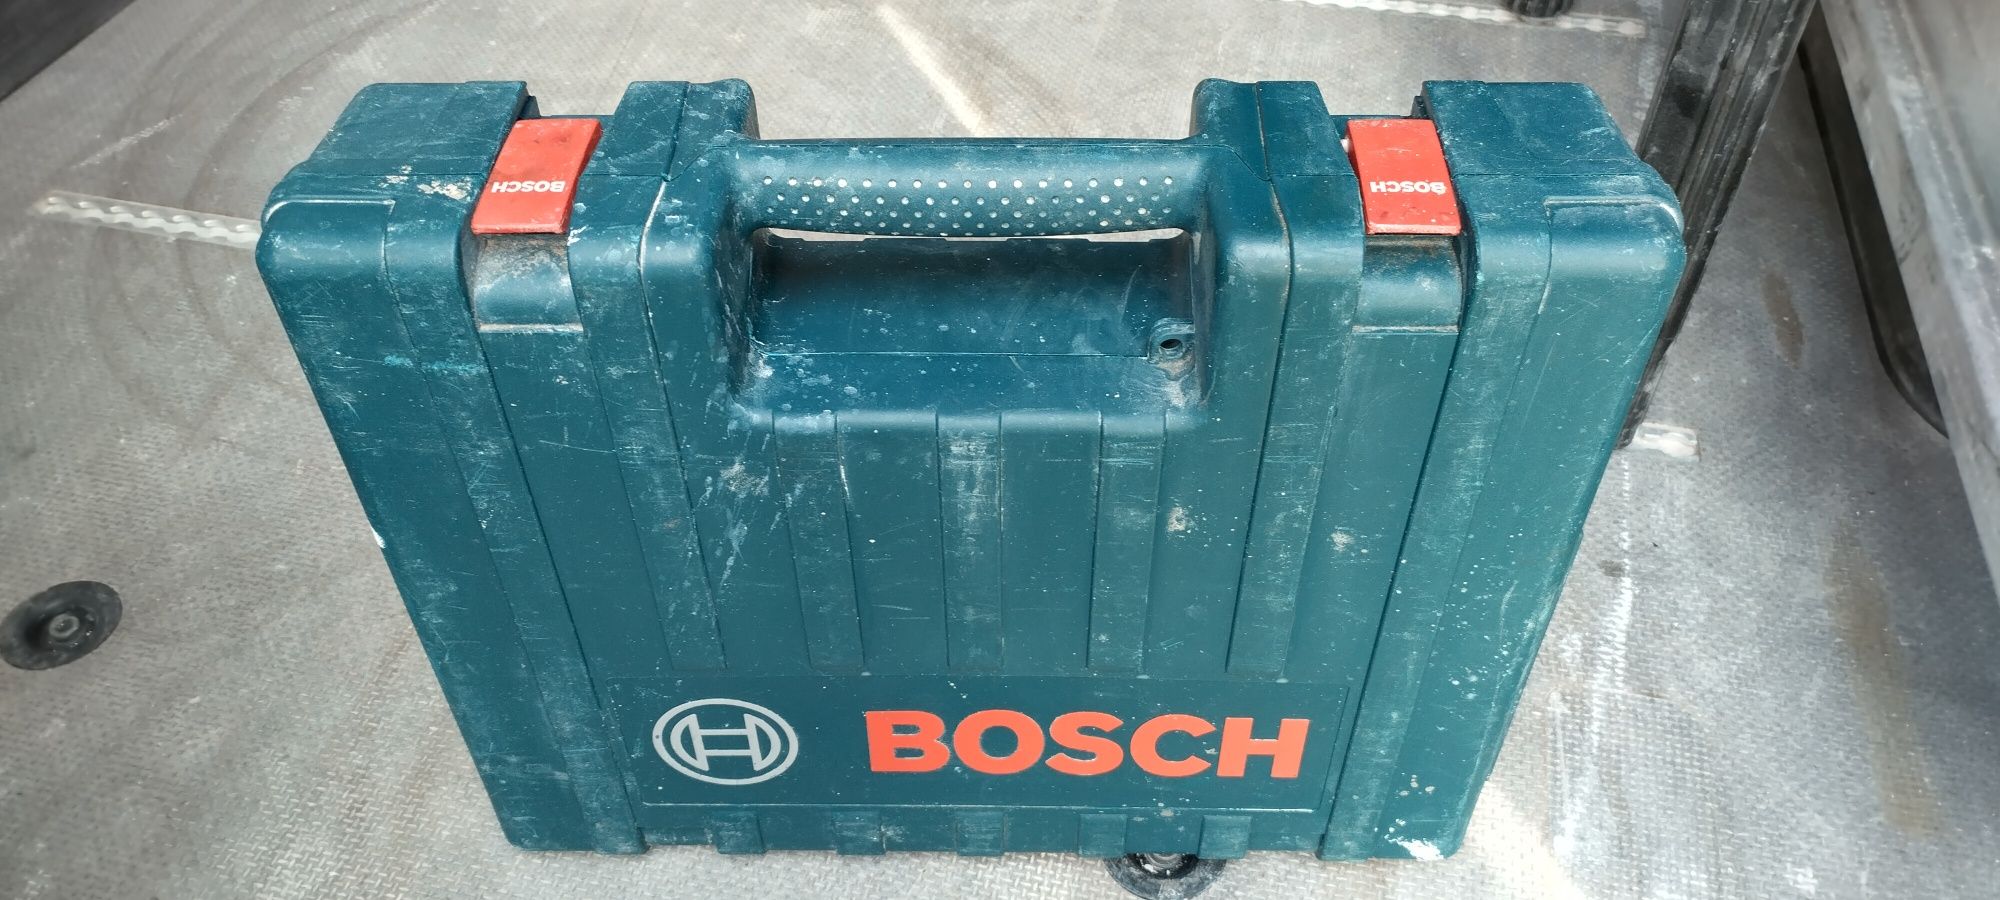 Bosch GBH 2600 Professional Młotowiertarka